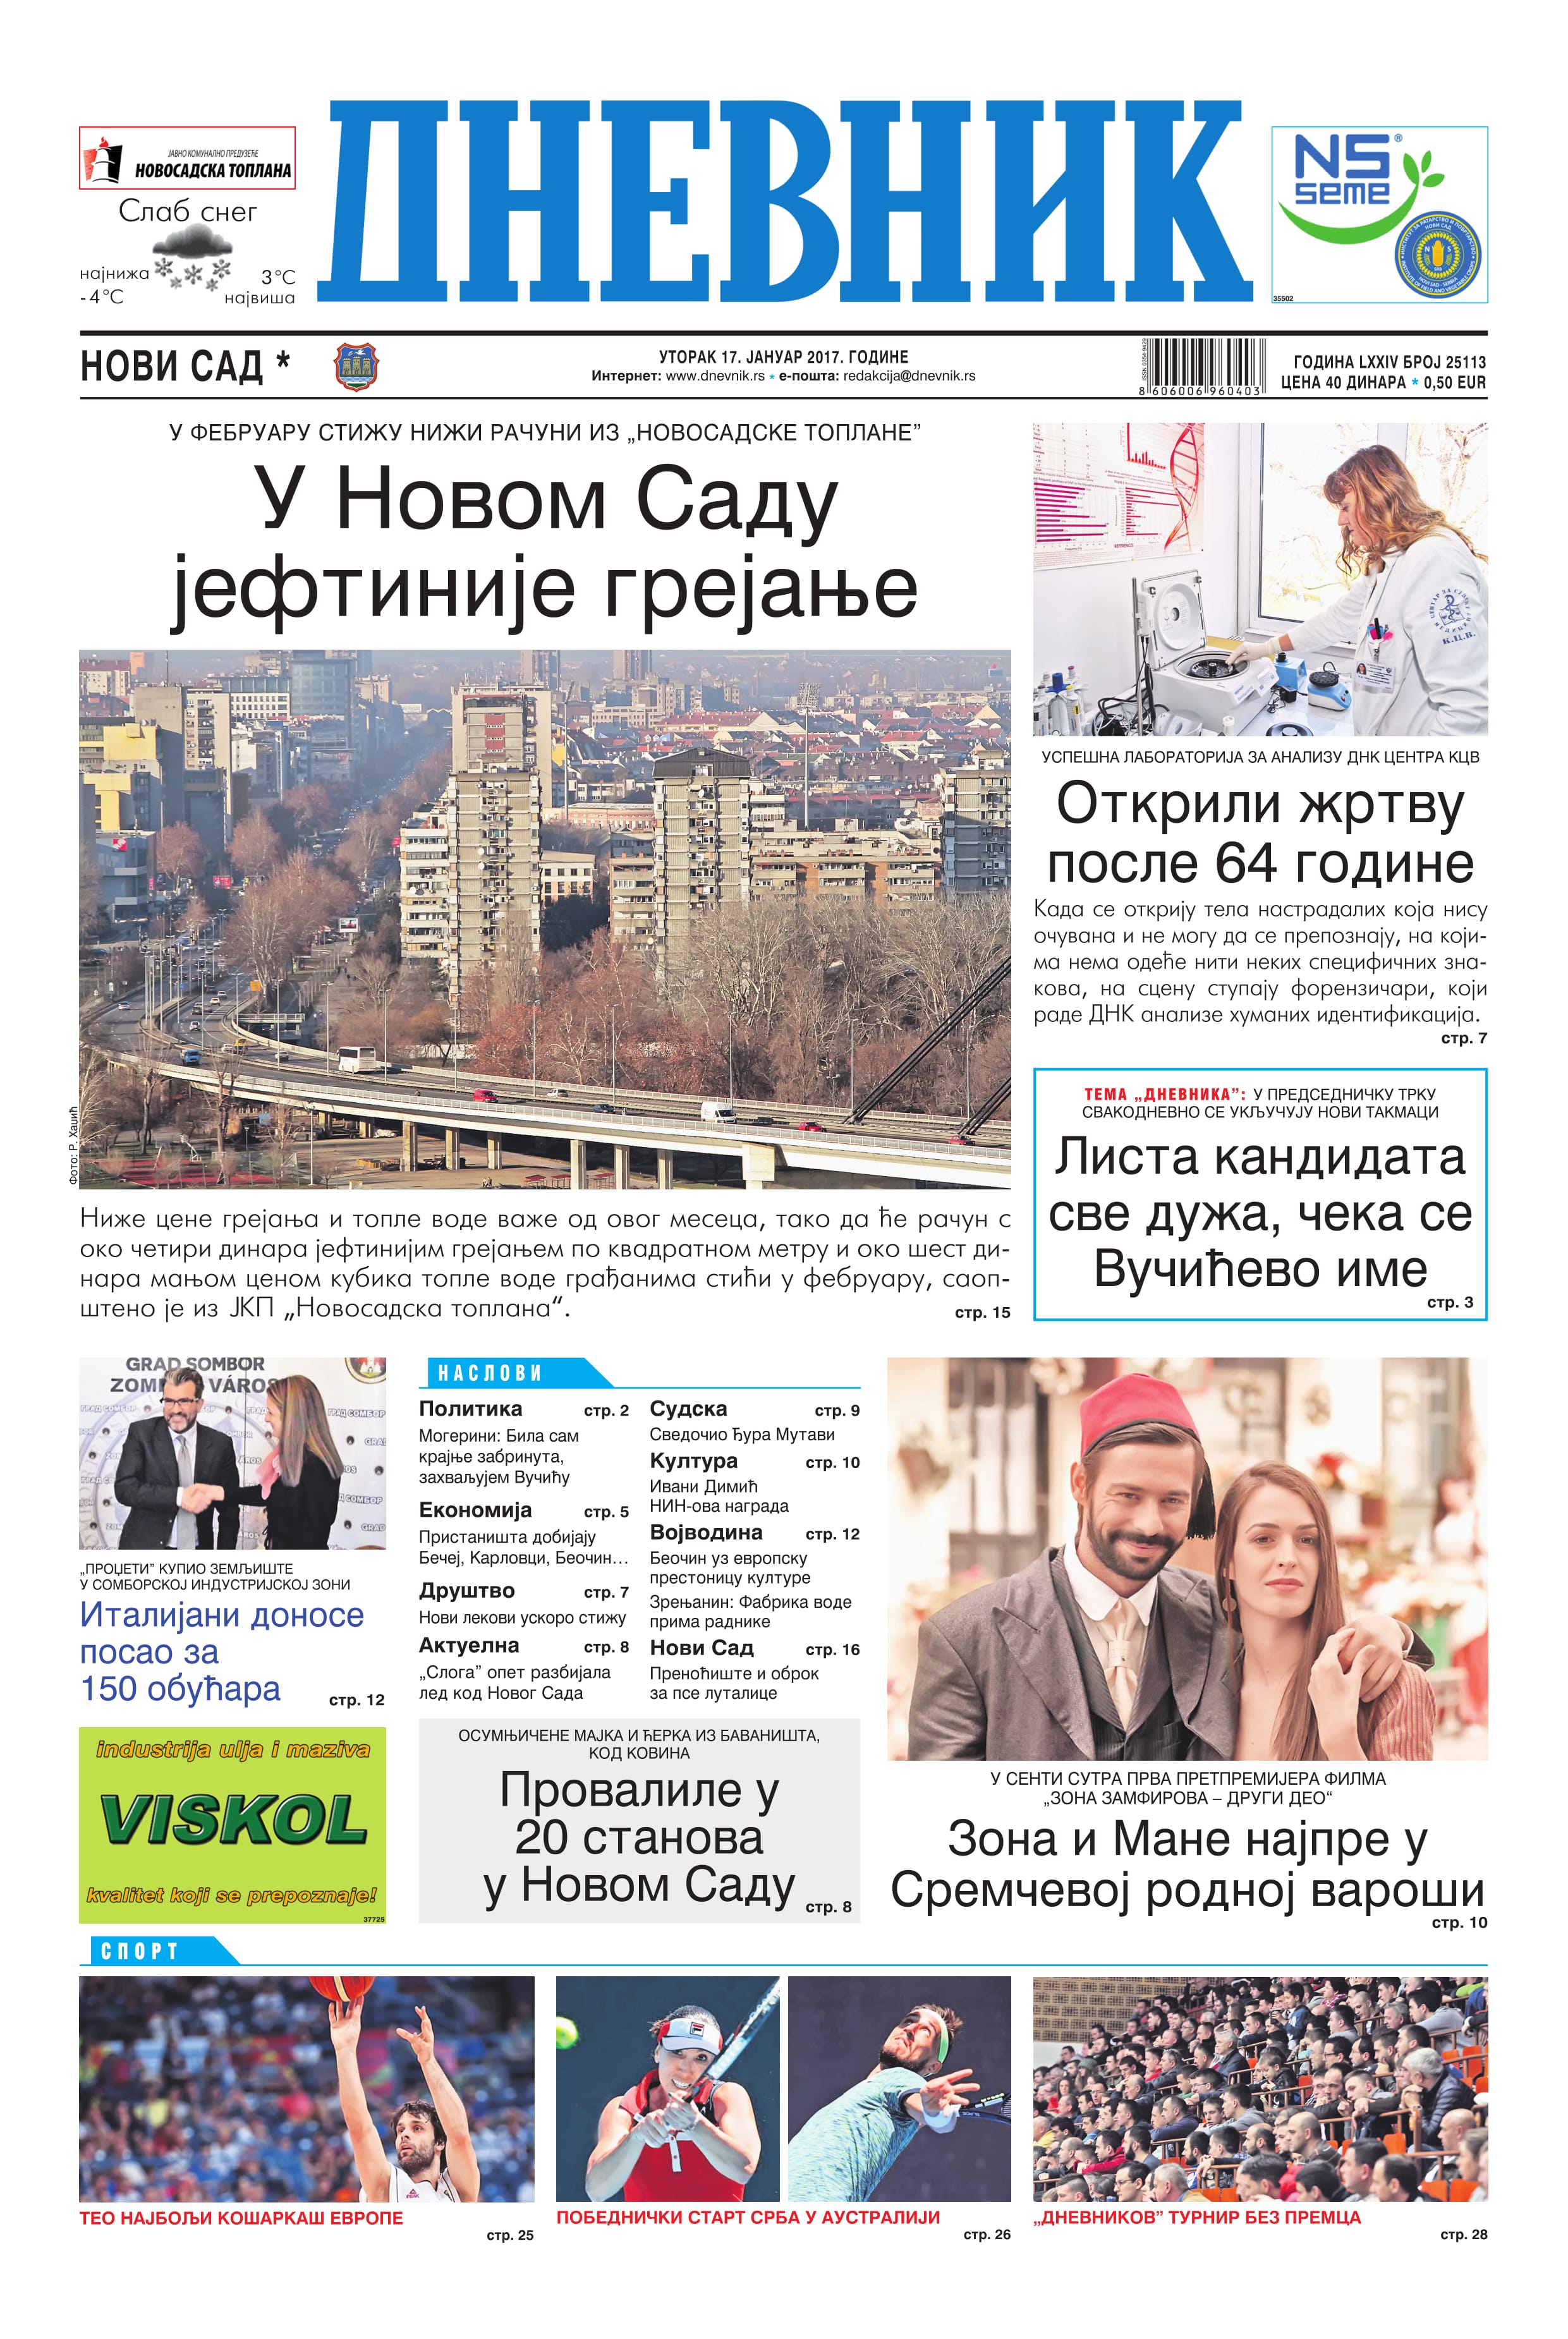 Novosadski Dnevnik